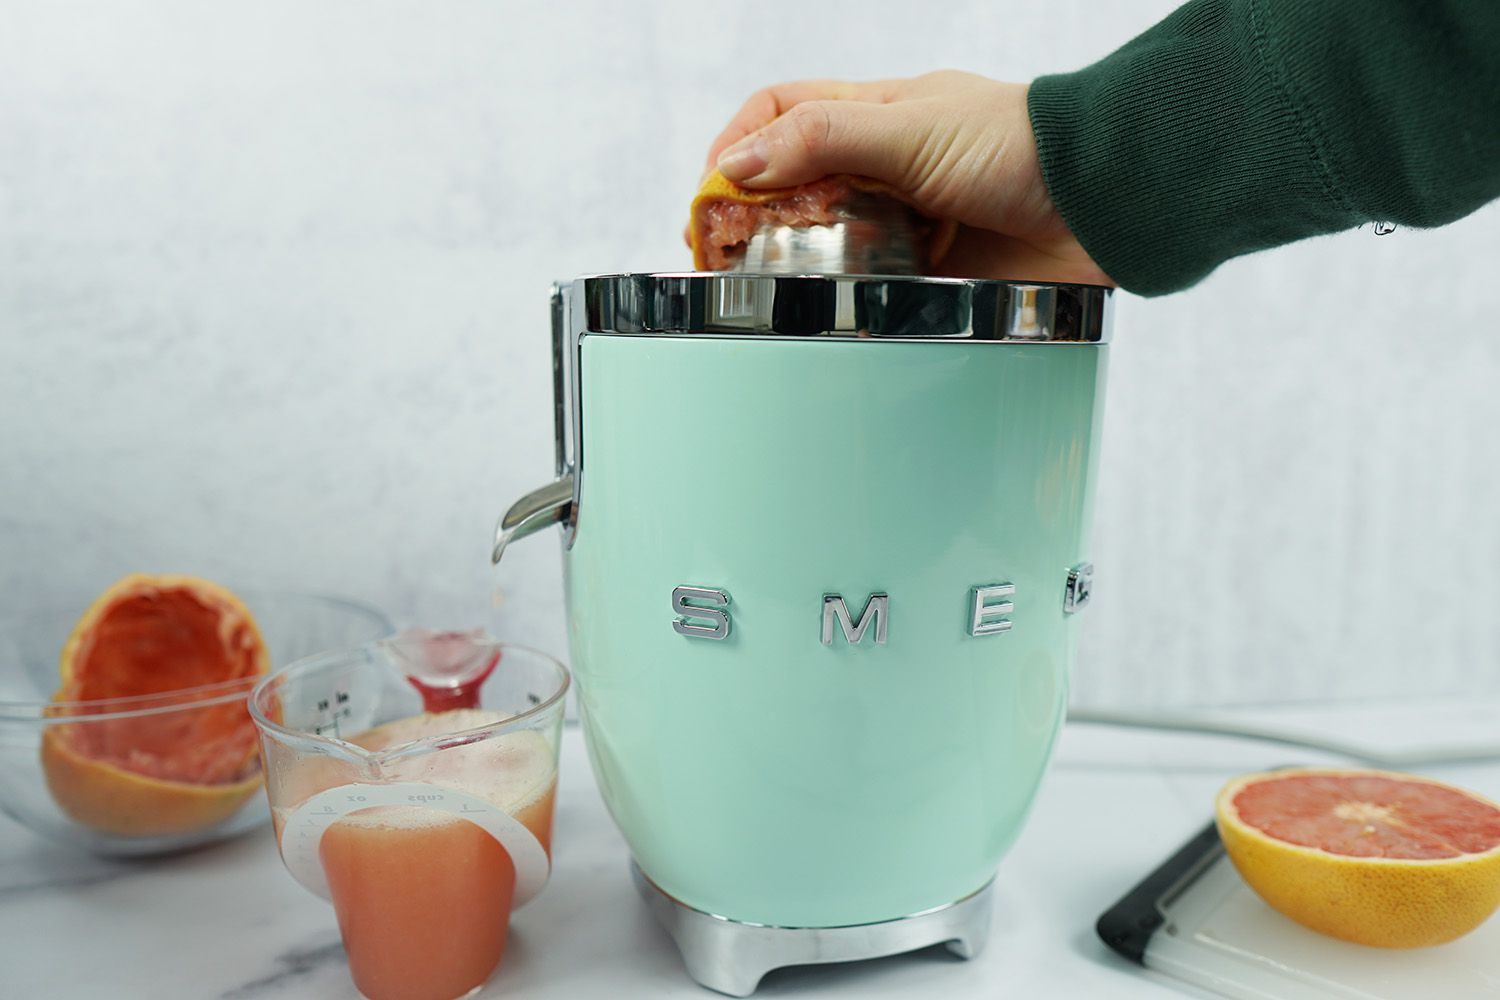 a hand juicing a grapefruit half on the Smeg electric citrus juicer